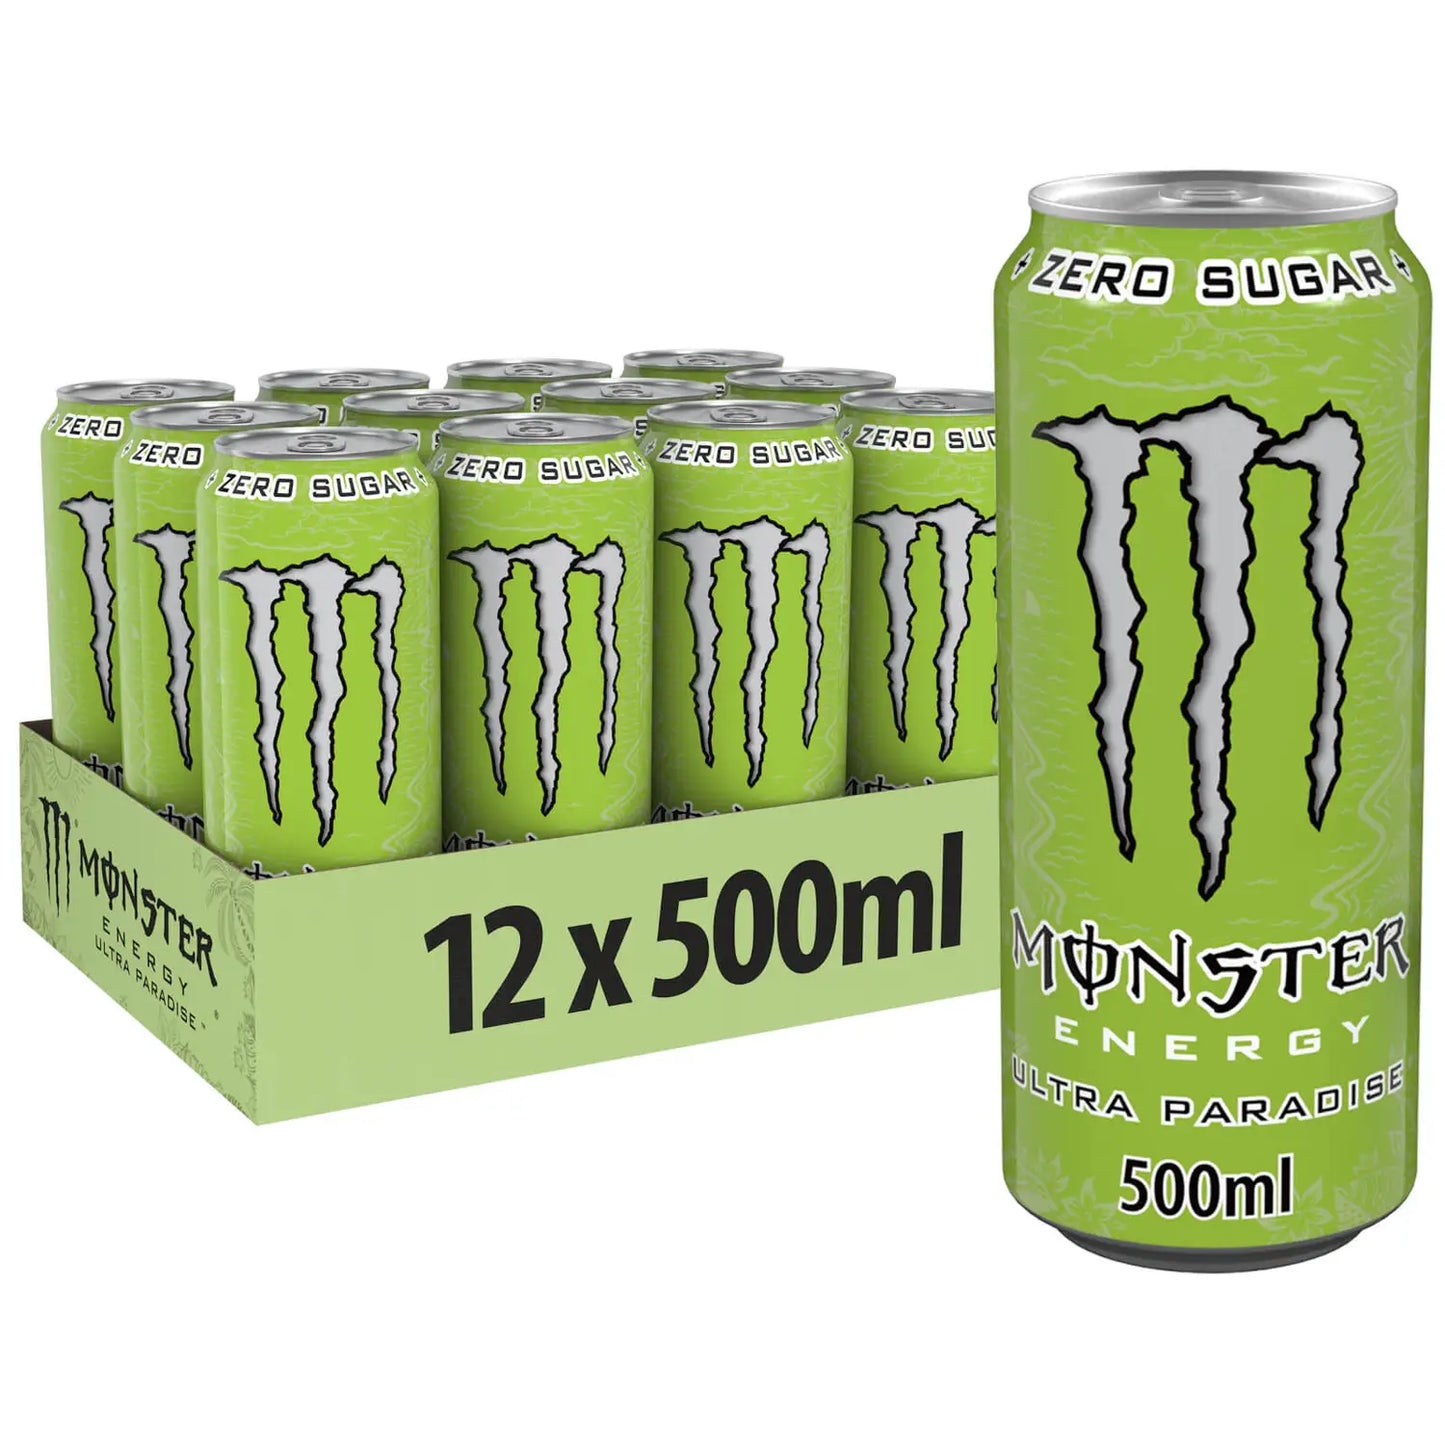 Monster Ultra Paradise Energy Drink 12 x 500ml - Zero Sugar